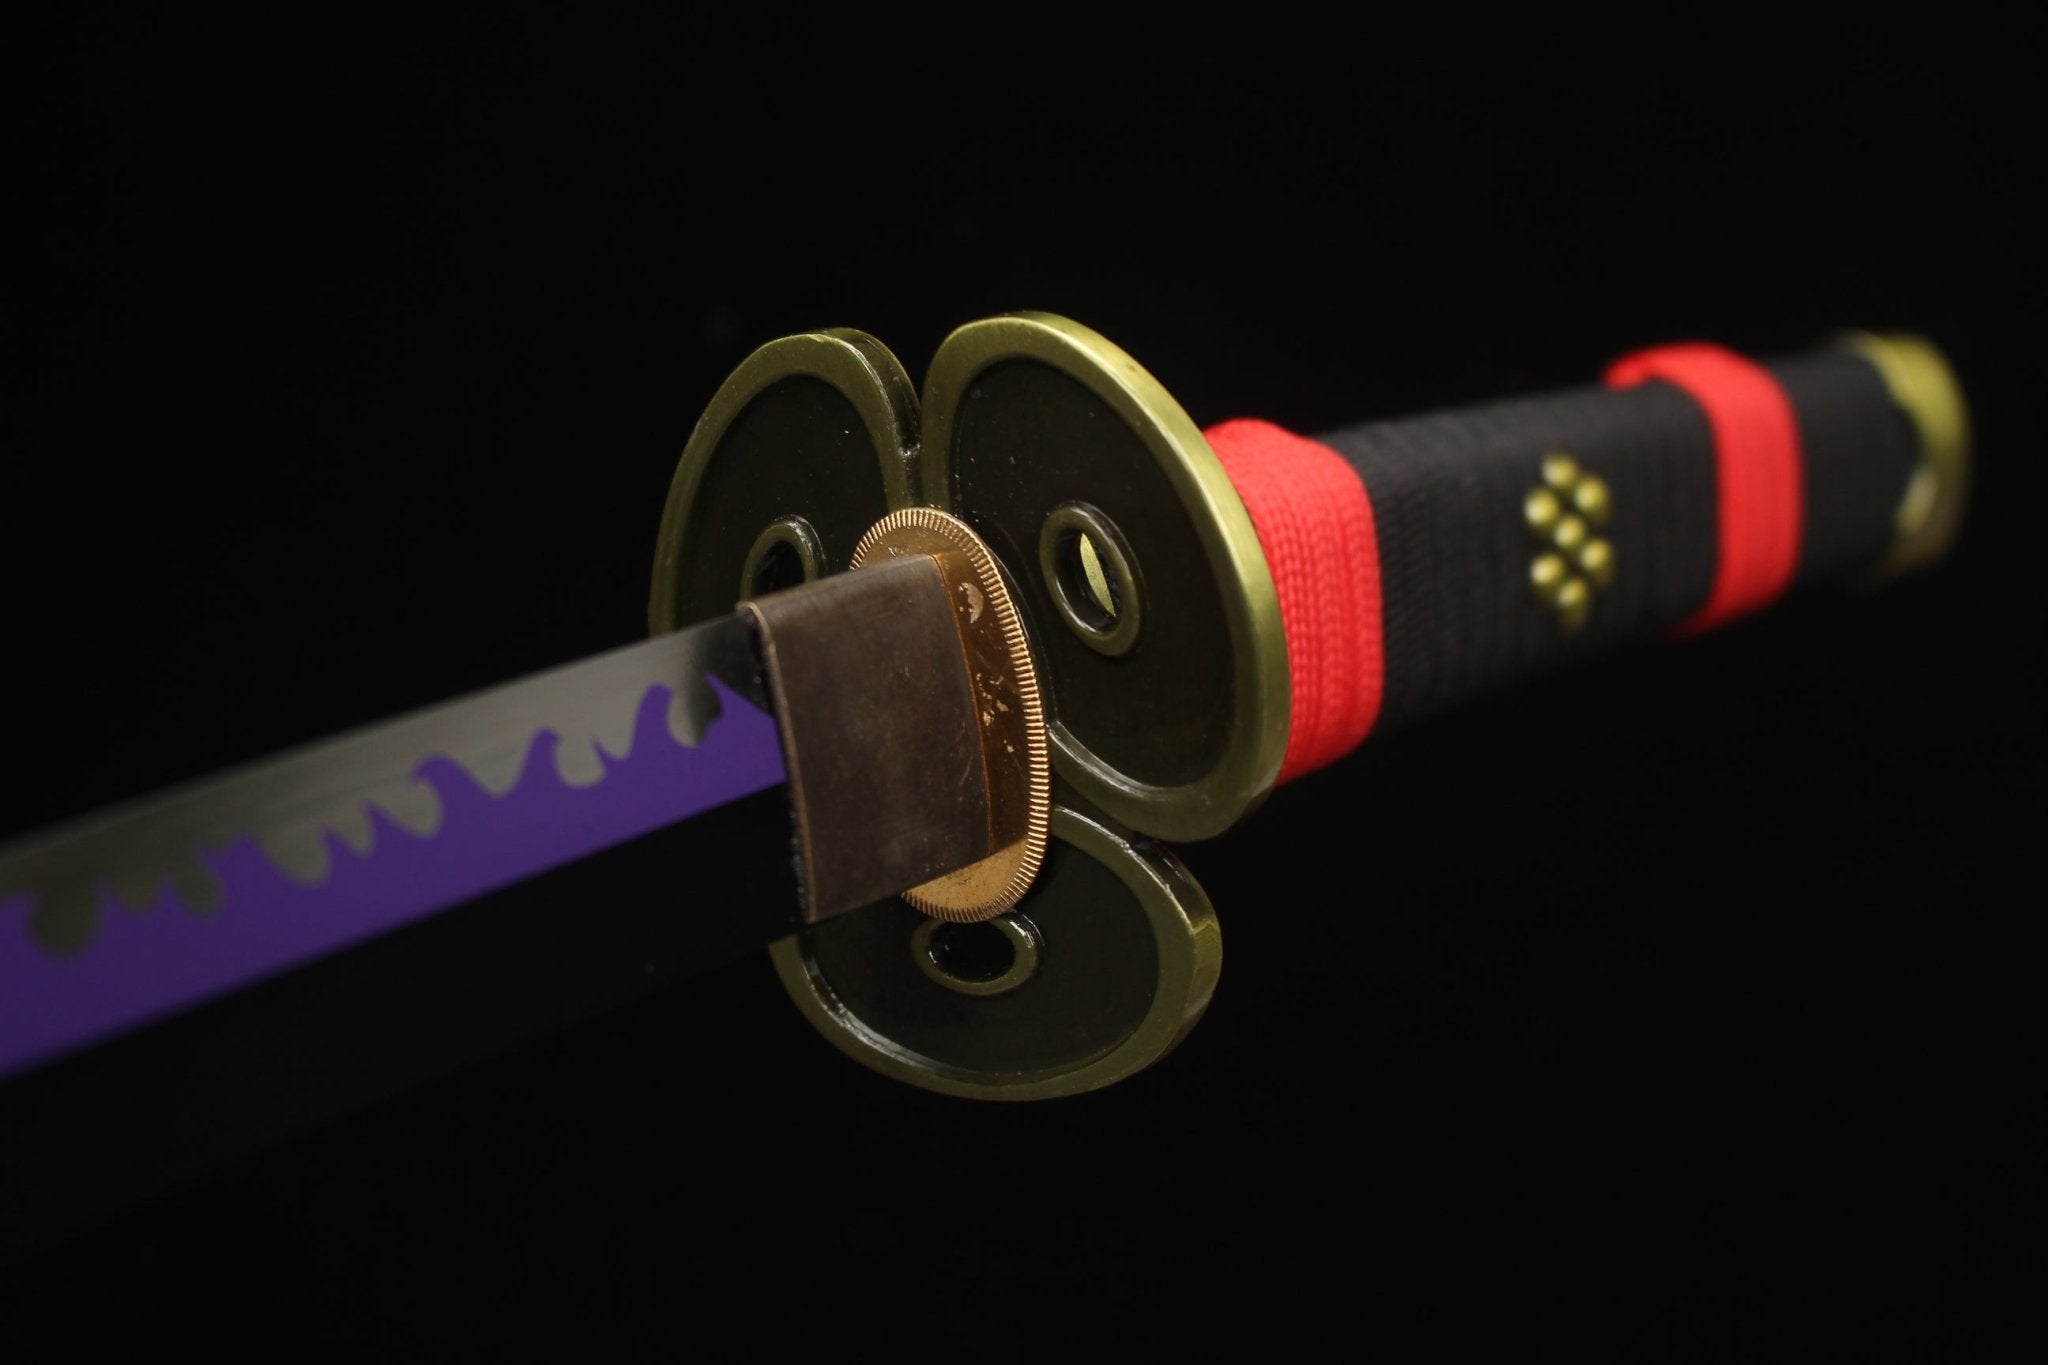 Katana - Enma (阎魔) by NIMOFAN Katana丨Japanese sword, perfect for martial arts and collectors.